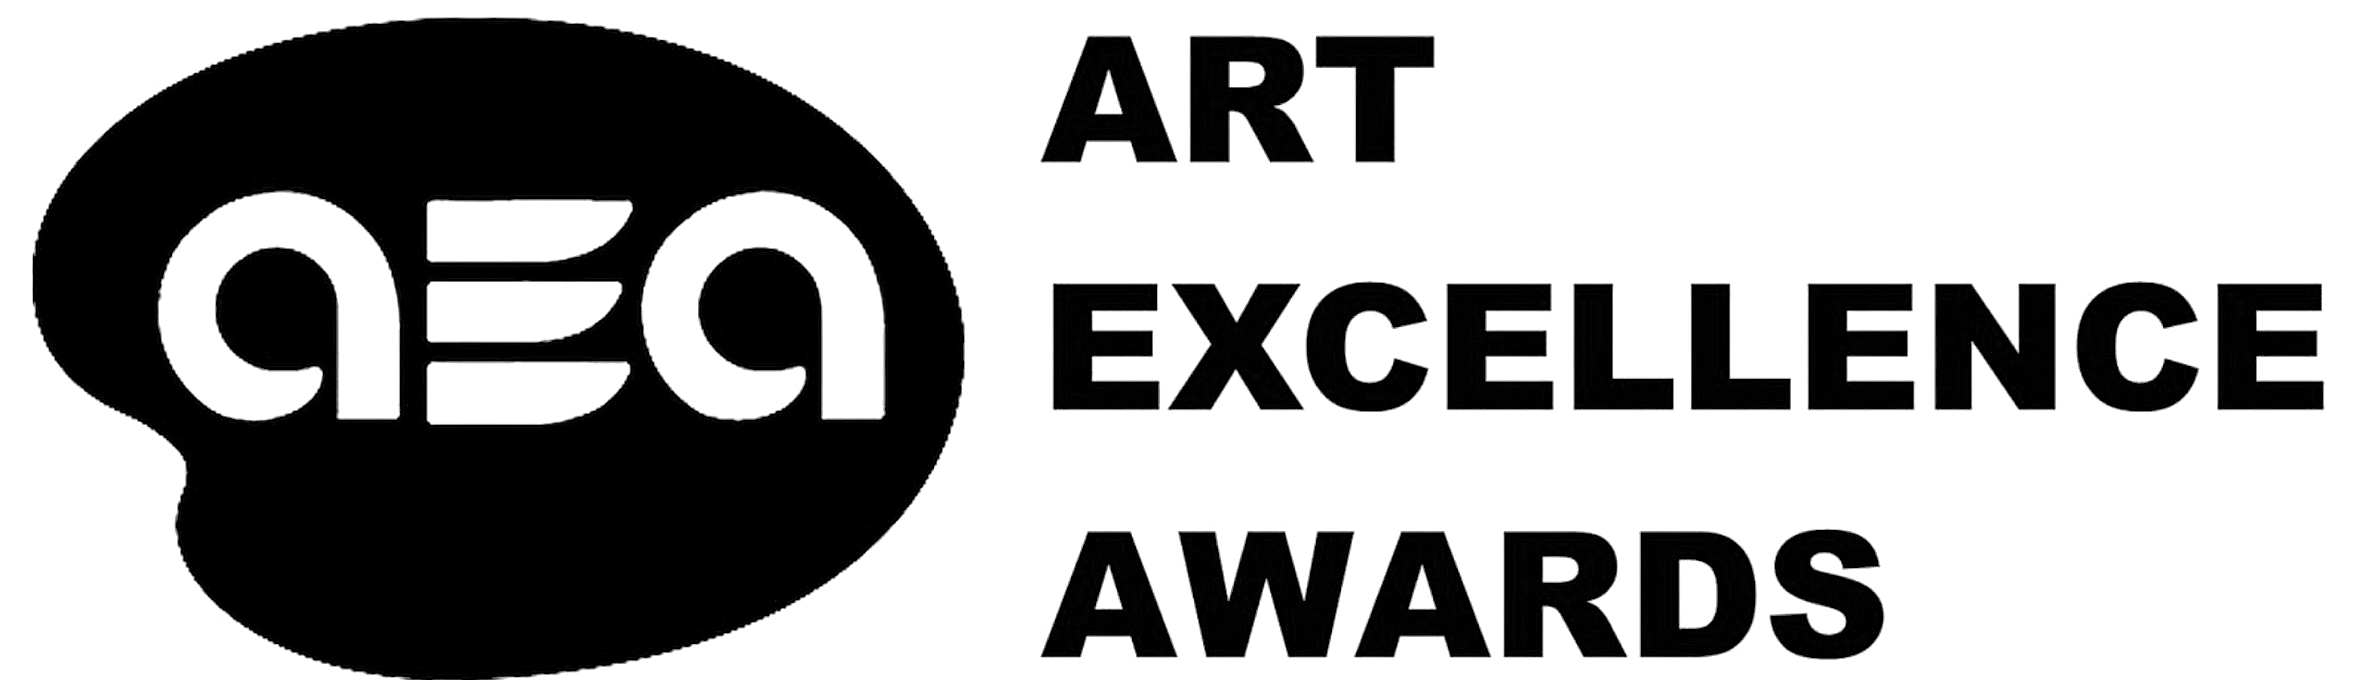 Art Excellence Awards